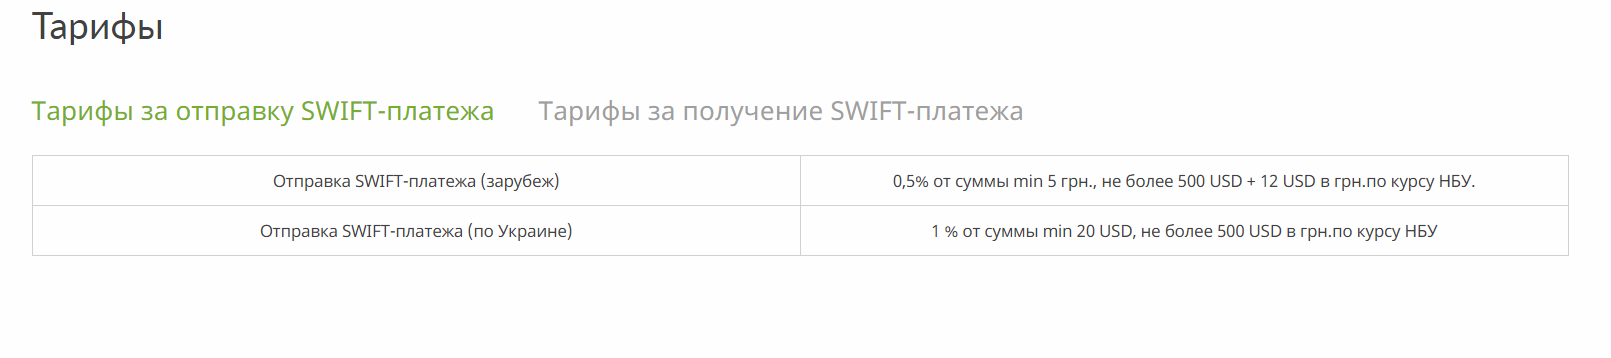 Тарифы на отправку SWIFT платежа